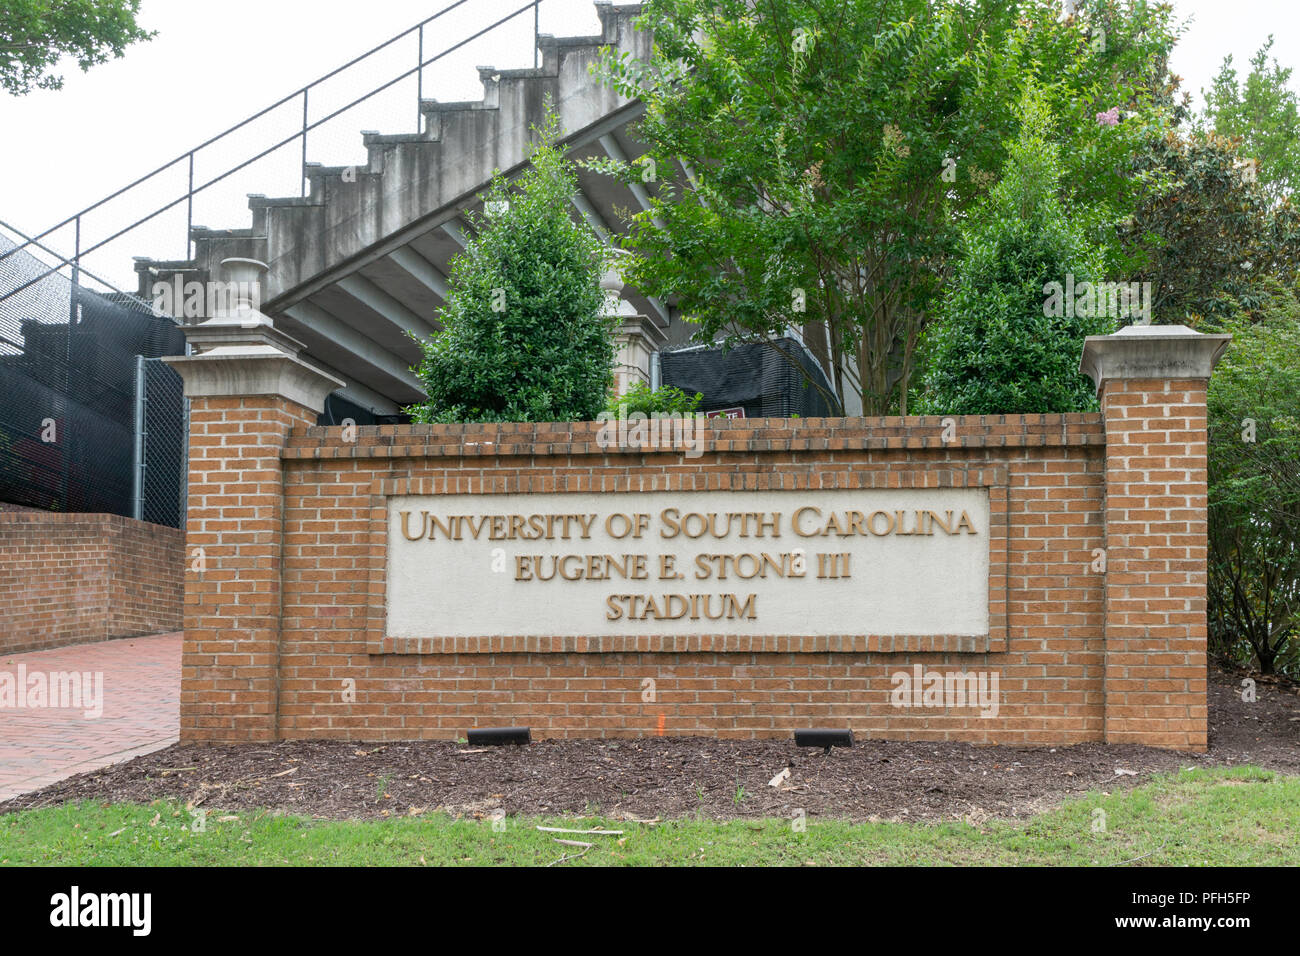 COLUMBIA, SC/USA JUNE 5, 2018:  Eugene E. Stone III Stadium on the campus of the University of South Carolina. Stock Photo